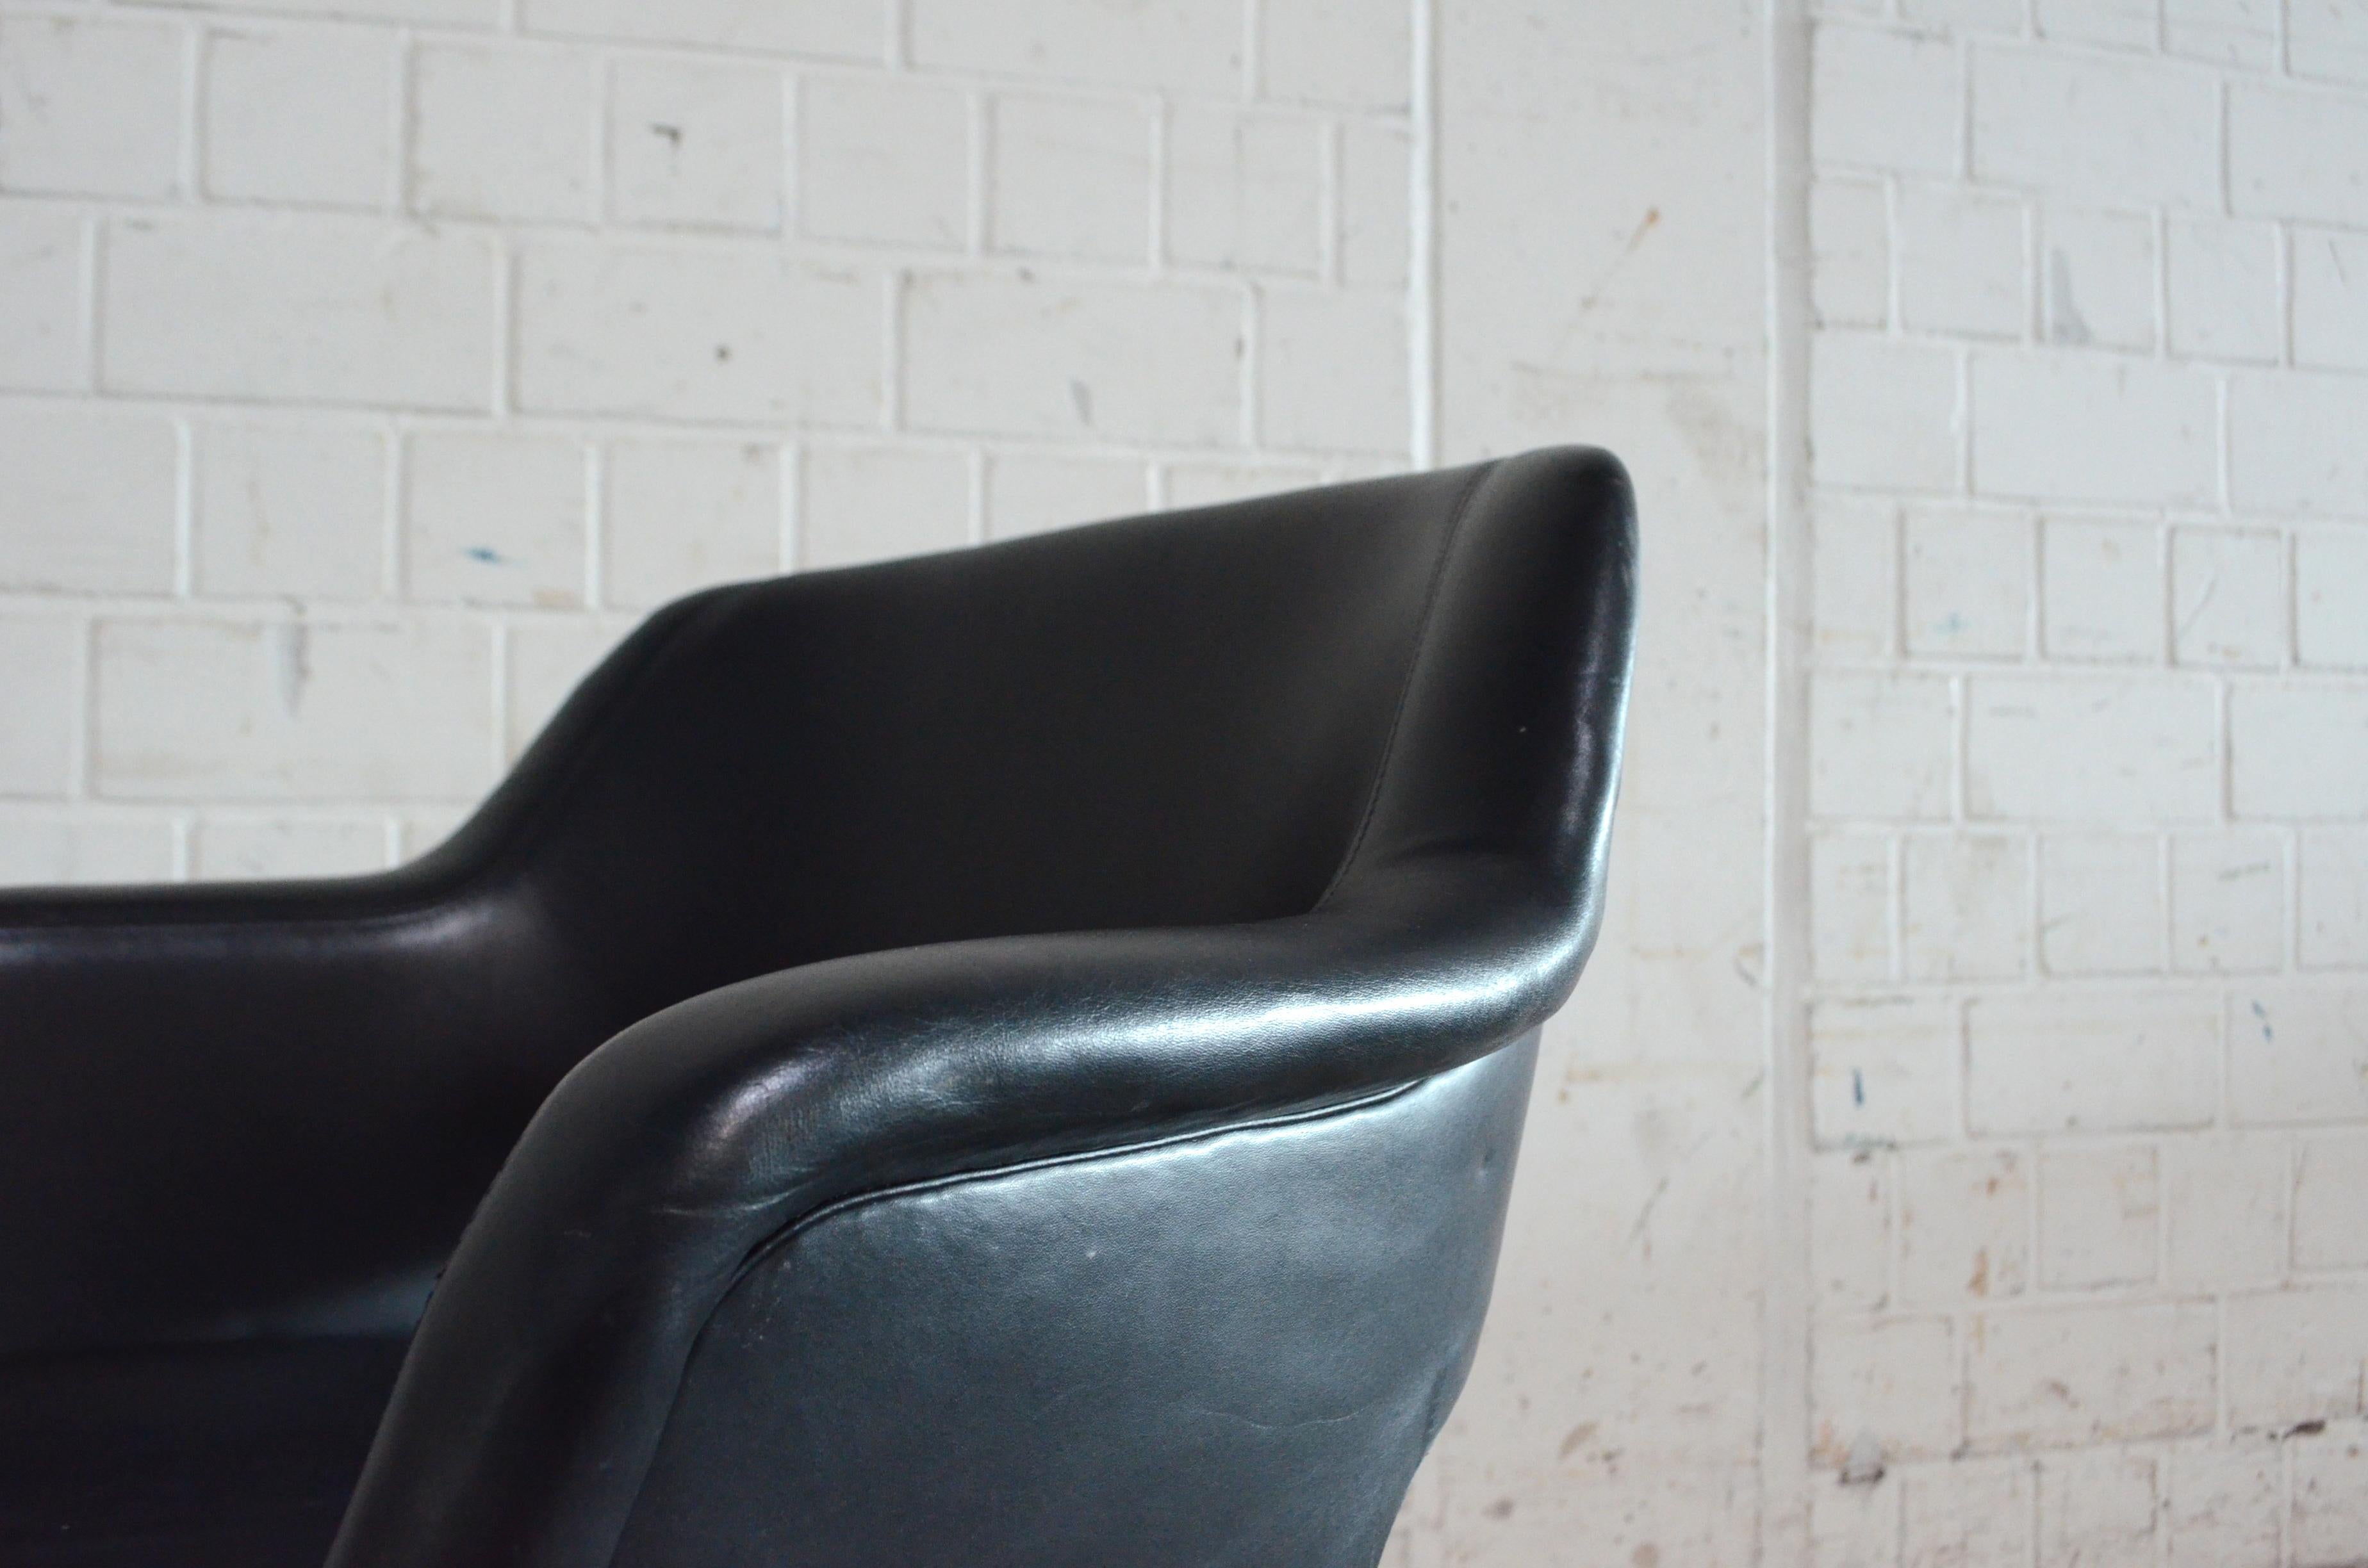 Olli Mannermaa 3 Leather Kilta Chair by Eugen Schmidt & Cassina Martela For Sale 9